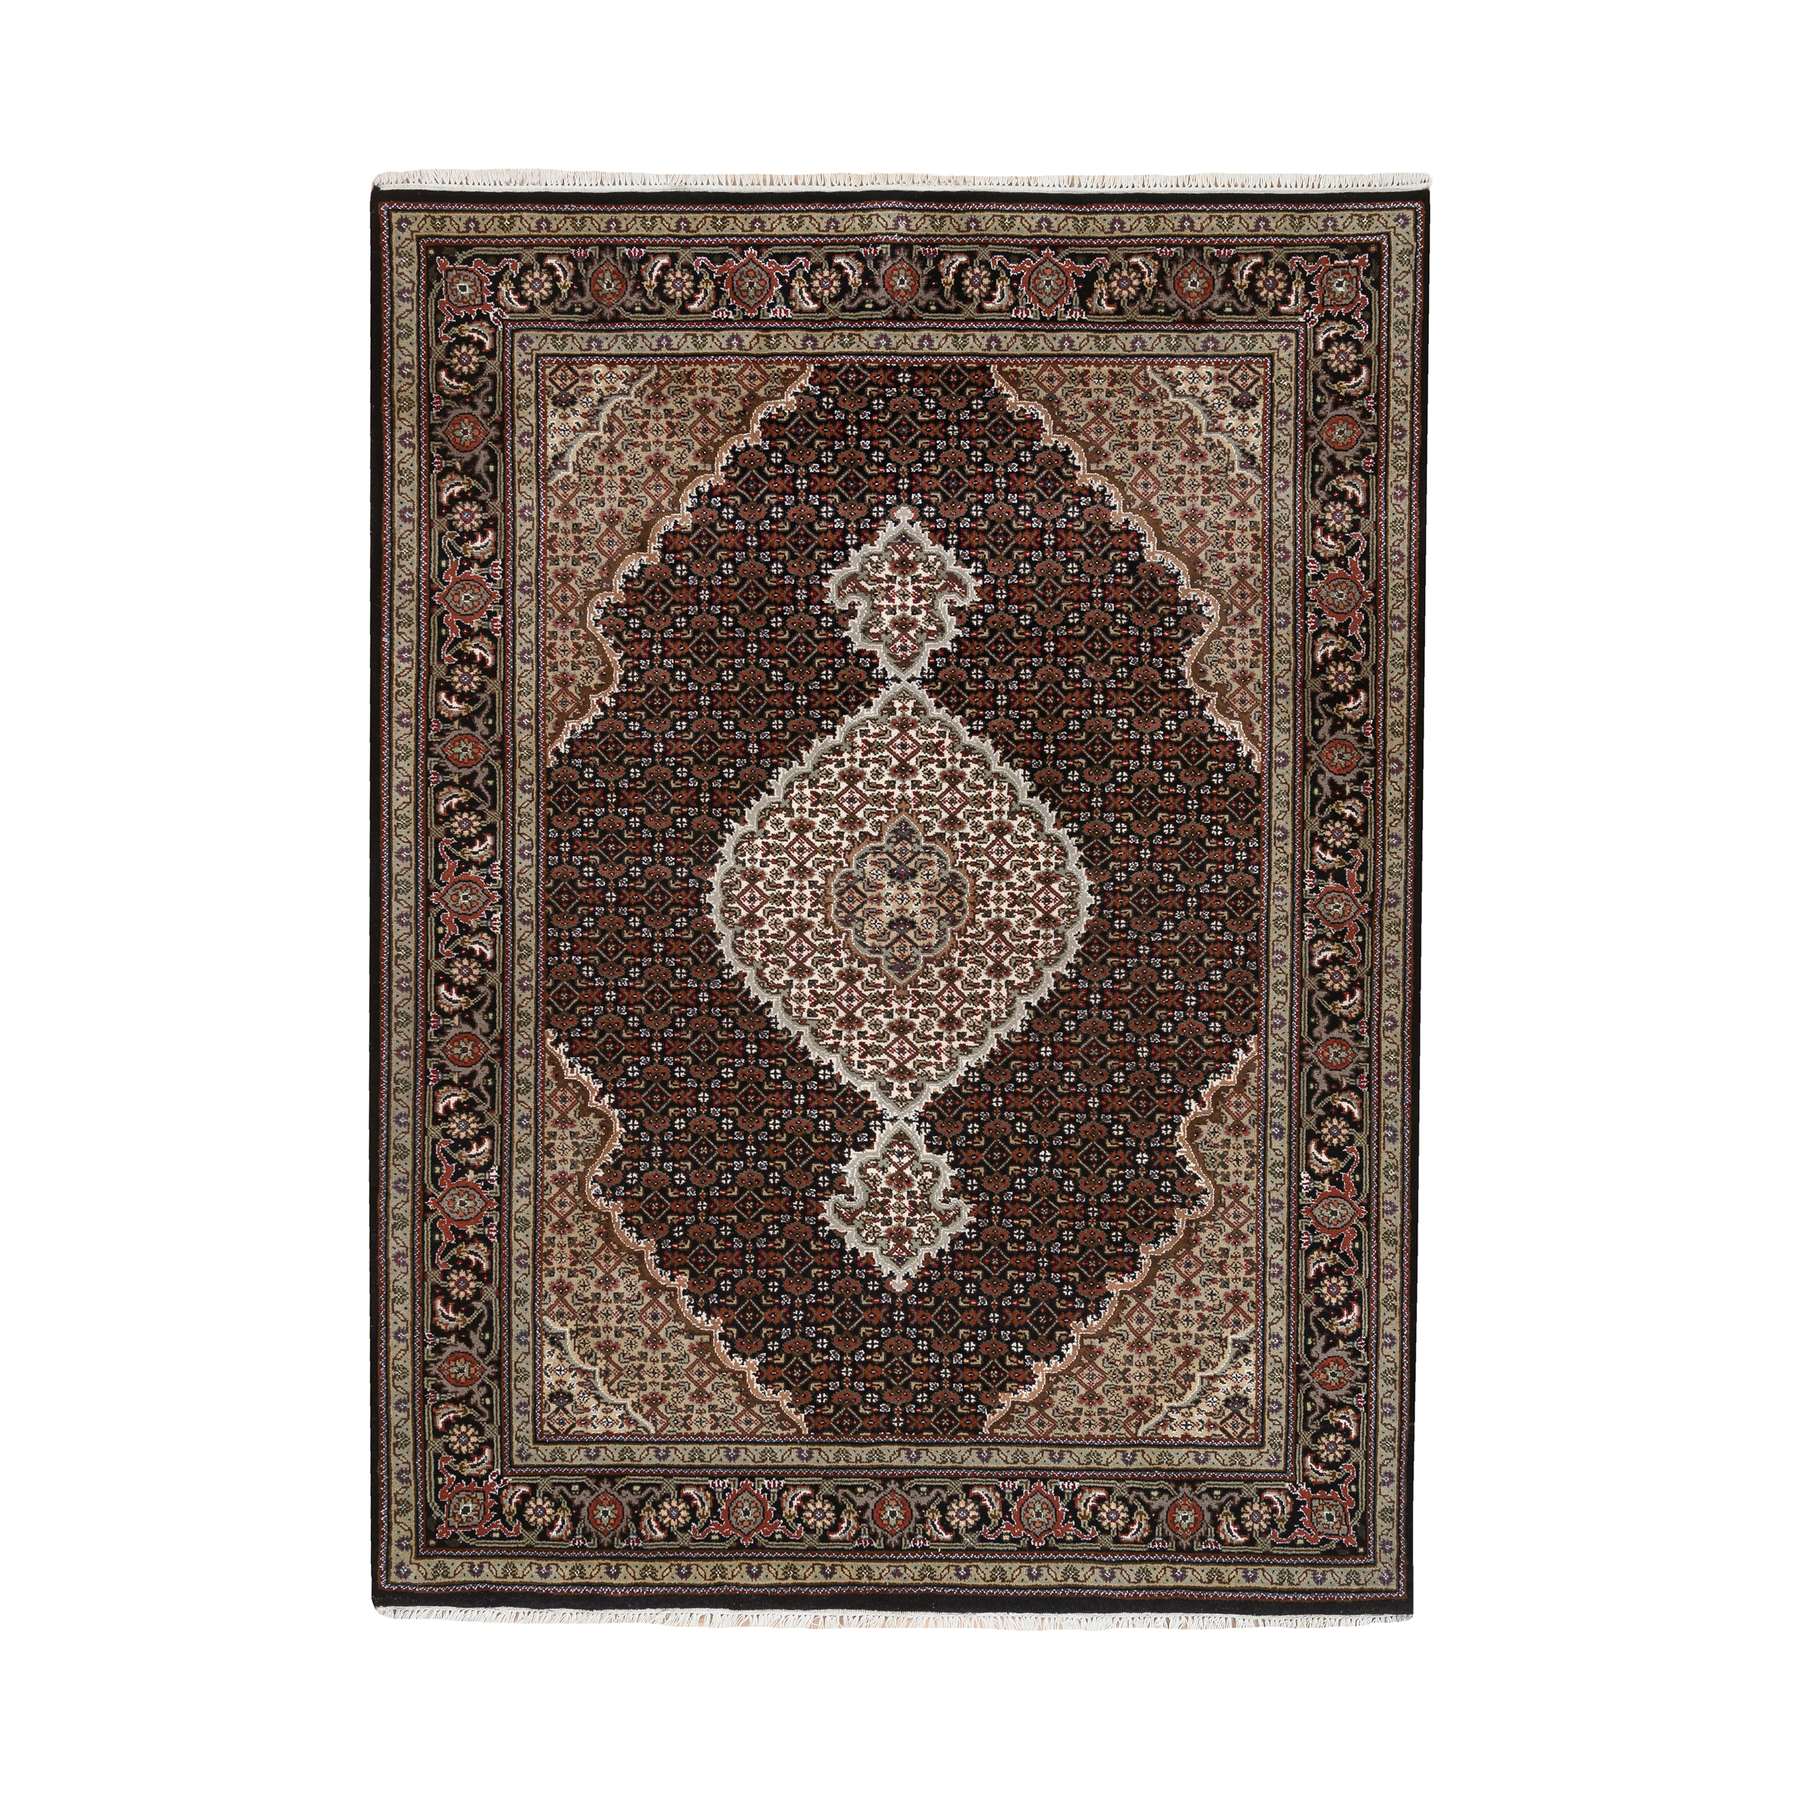 5'x7' Wool and Silk 175 KPSI Hand Woven Rich Black Tabriz Mahi with Fish Medallion Design Oriental Rug 